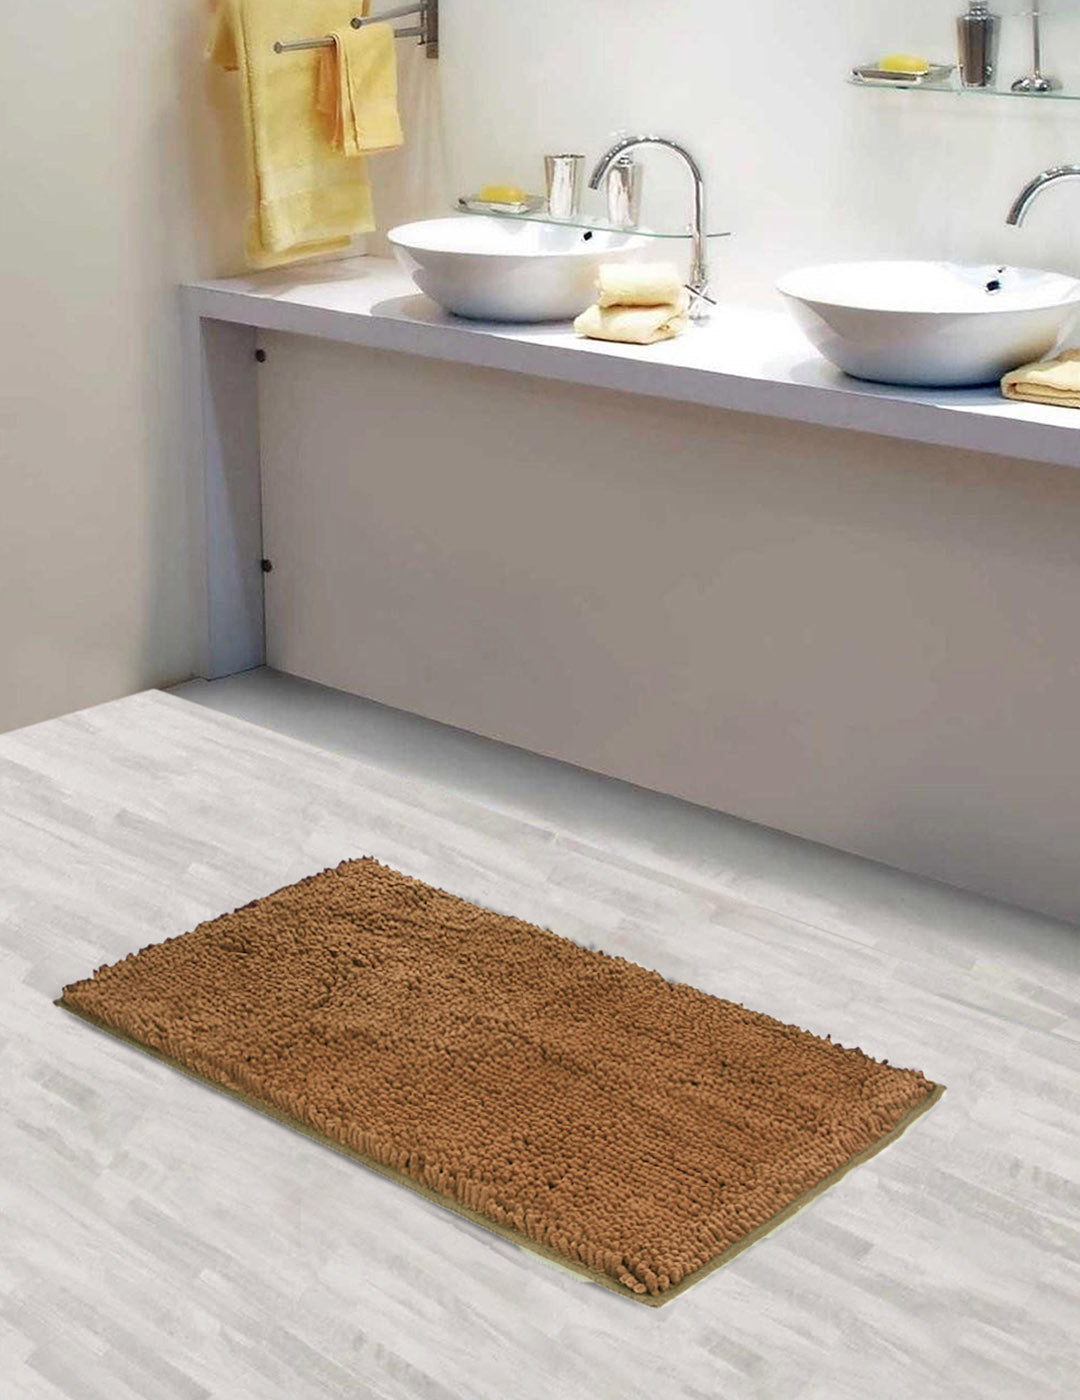 Lushomes Bathroom Mat, 2200 GSM Floor, bath mat Mat with High Pile Microfiber, anti skid mat for bathroom Floor, bath mat Non Slip Anti Slip, Premium Quality (20 x 30 inches, Single Pc, Beige)